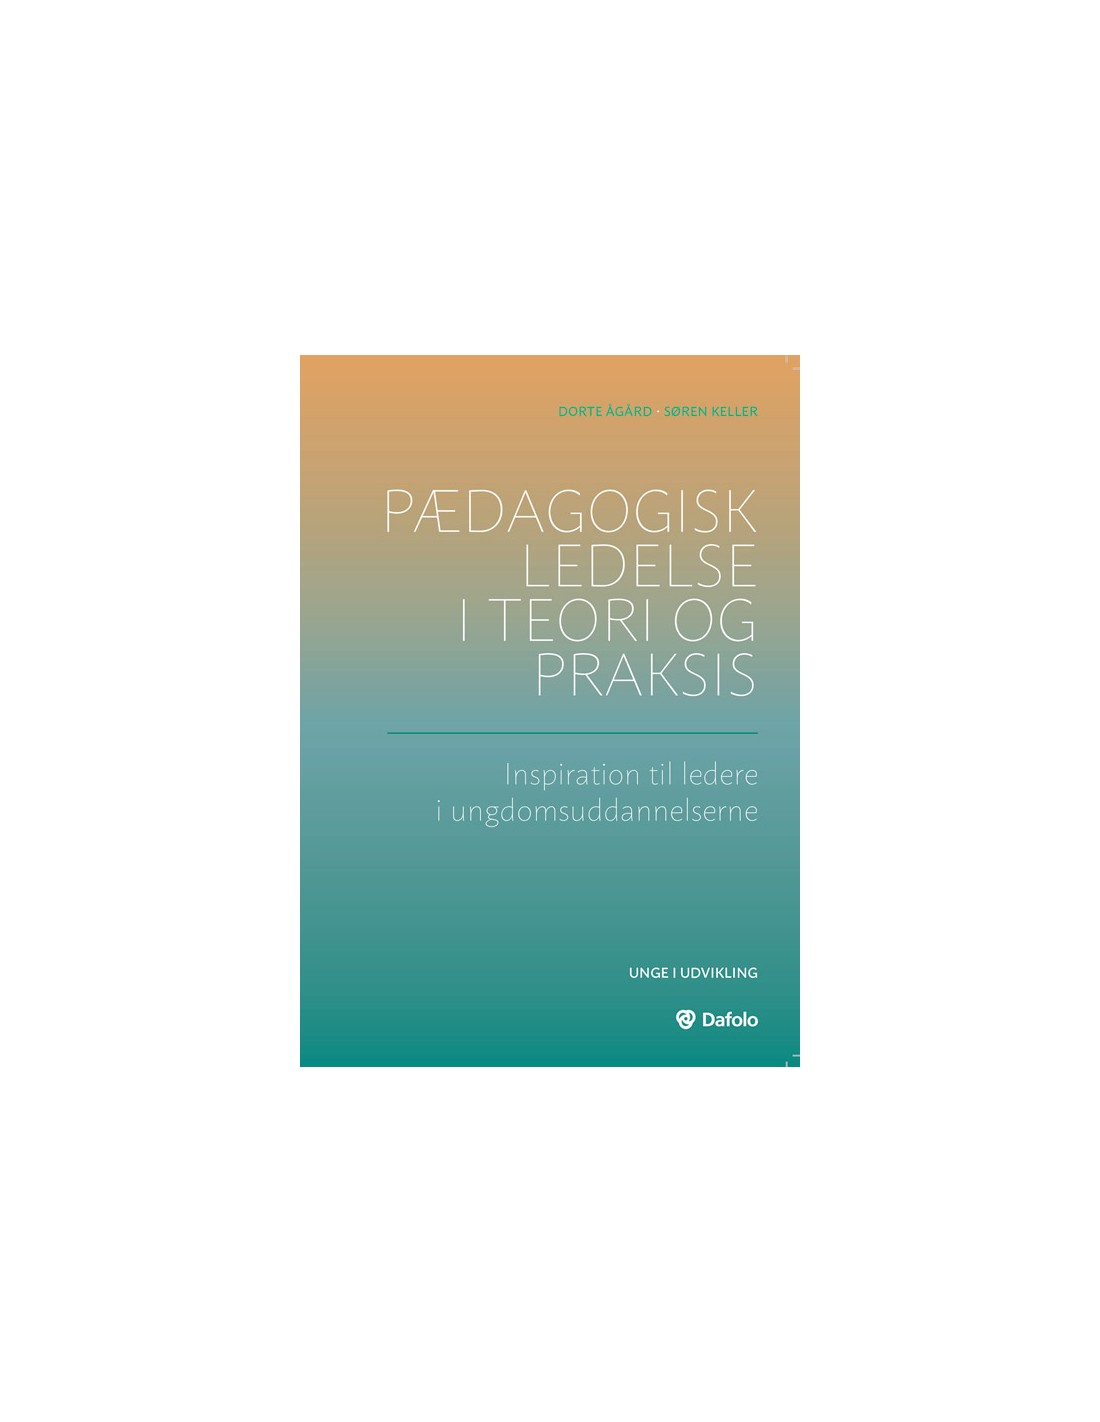 Pædagogisk ledelse i teori og praksis - ISBN 9788771606461 skrevet af Dorte og Keller